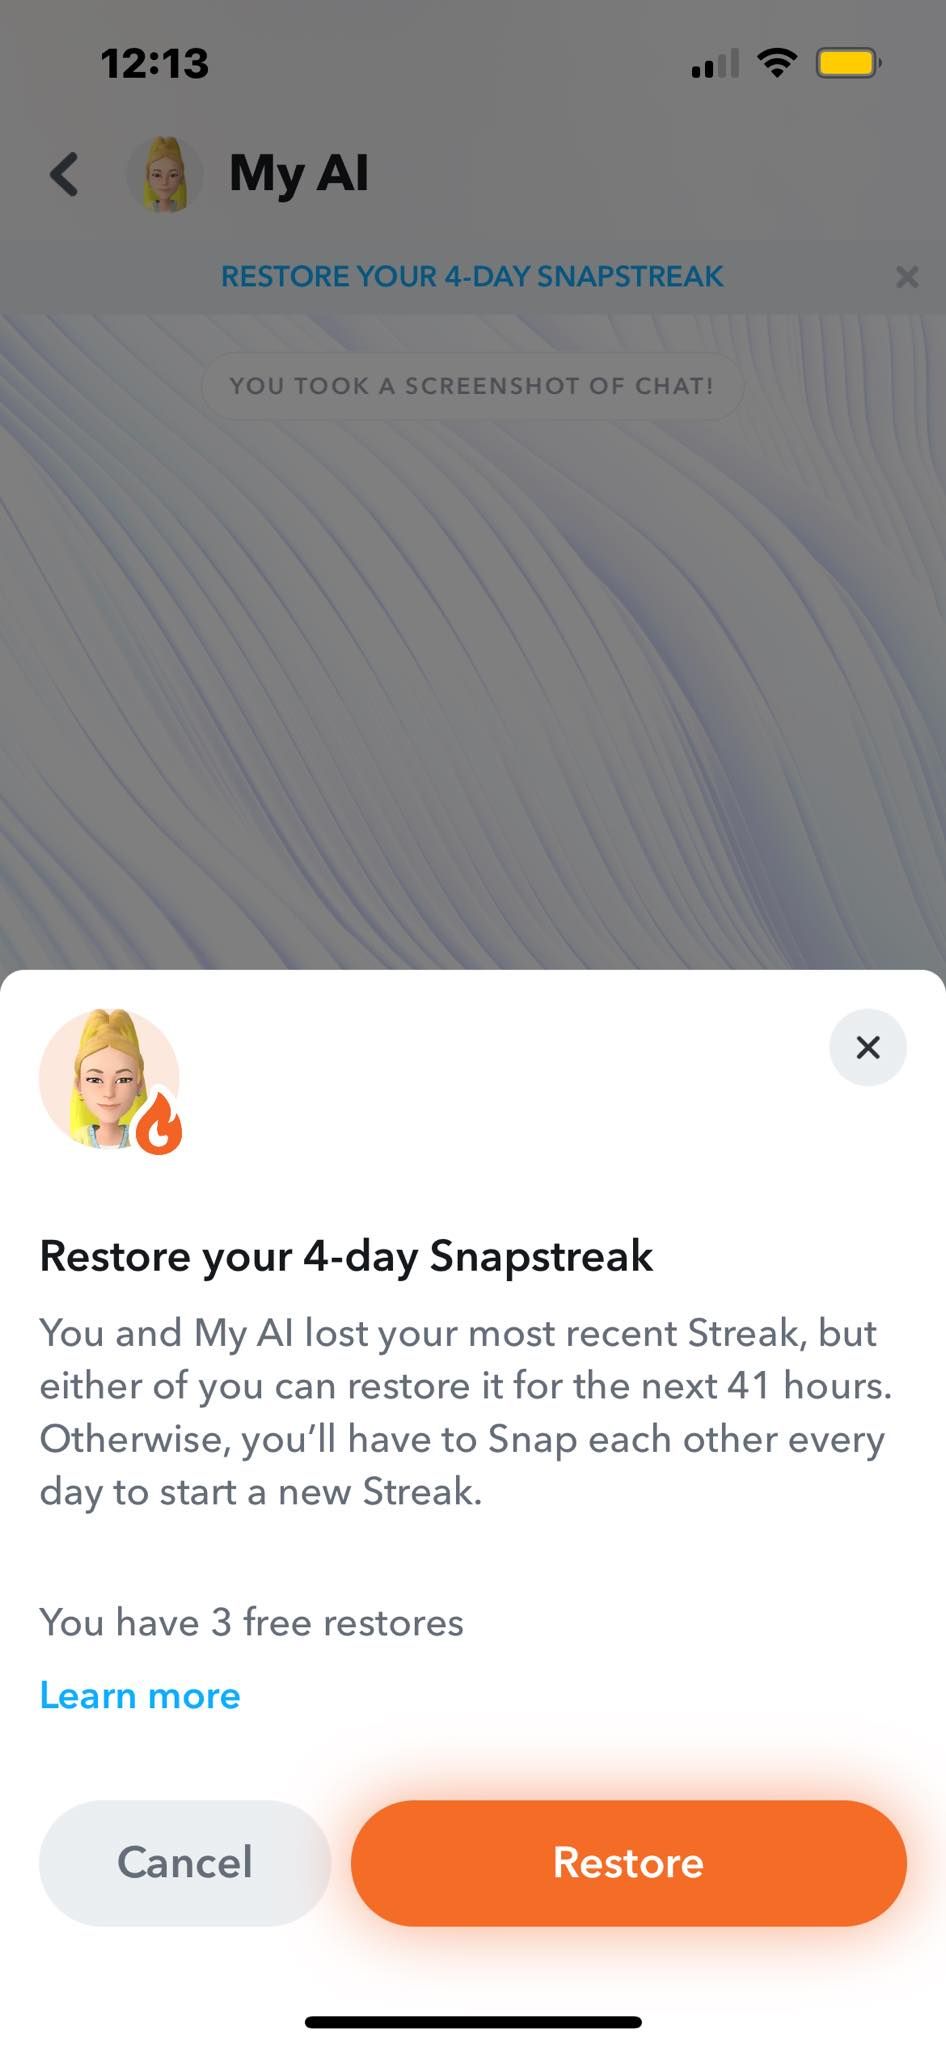 Option to Restore 4-Day Snapstreak